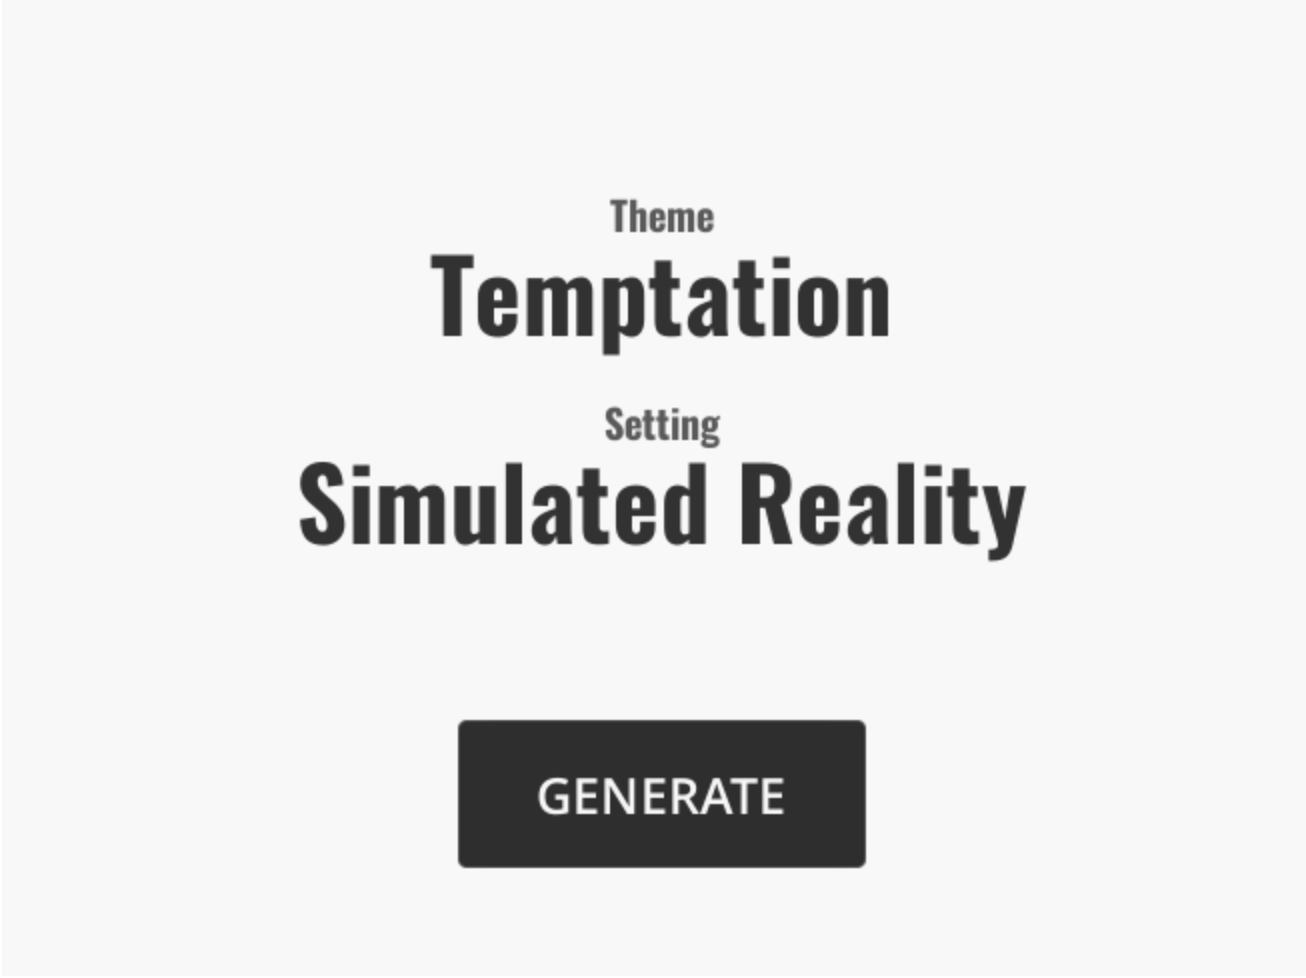 ide bureau falme Story Theme and Setting Generator - Let's Make a Game